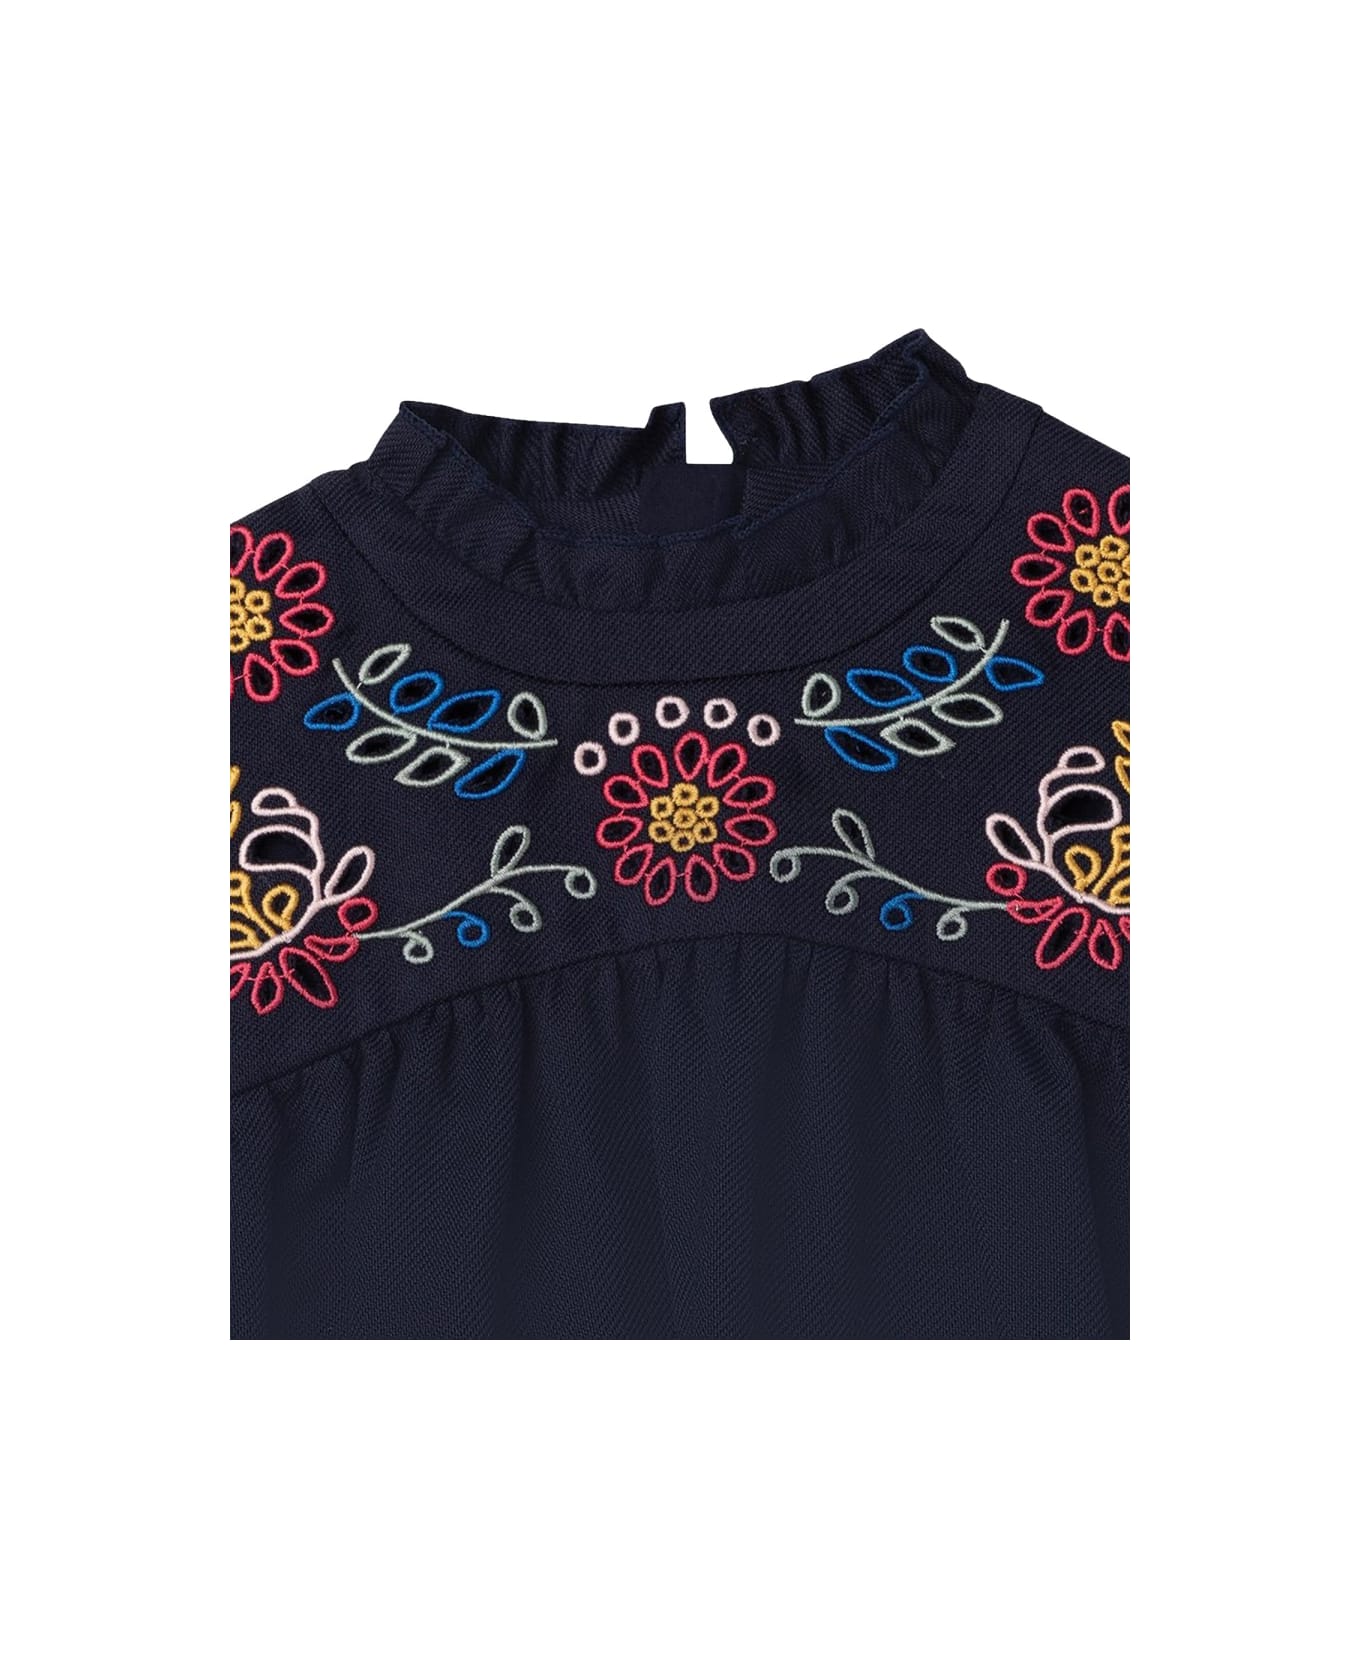 Chloé Flower Embroidery Dress - BLUE